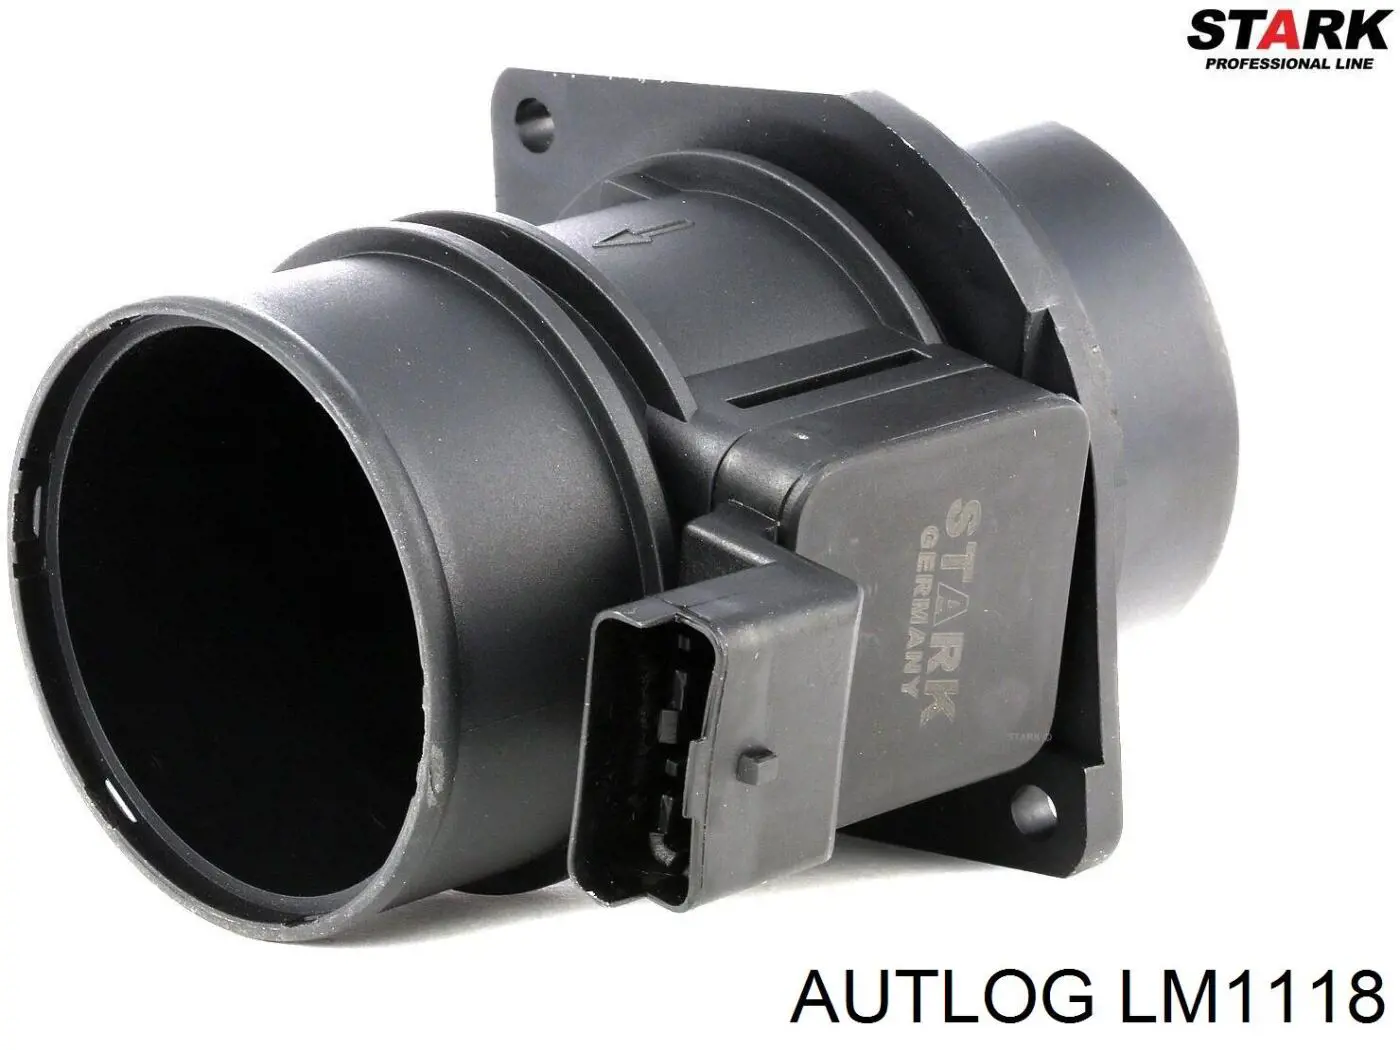 LM1118 Autlog sensor de fluxo (consumo de ar, medidor de consumo M.A.F. - (Mass Airflow))